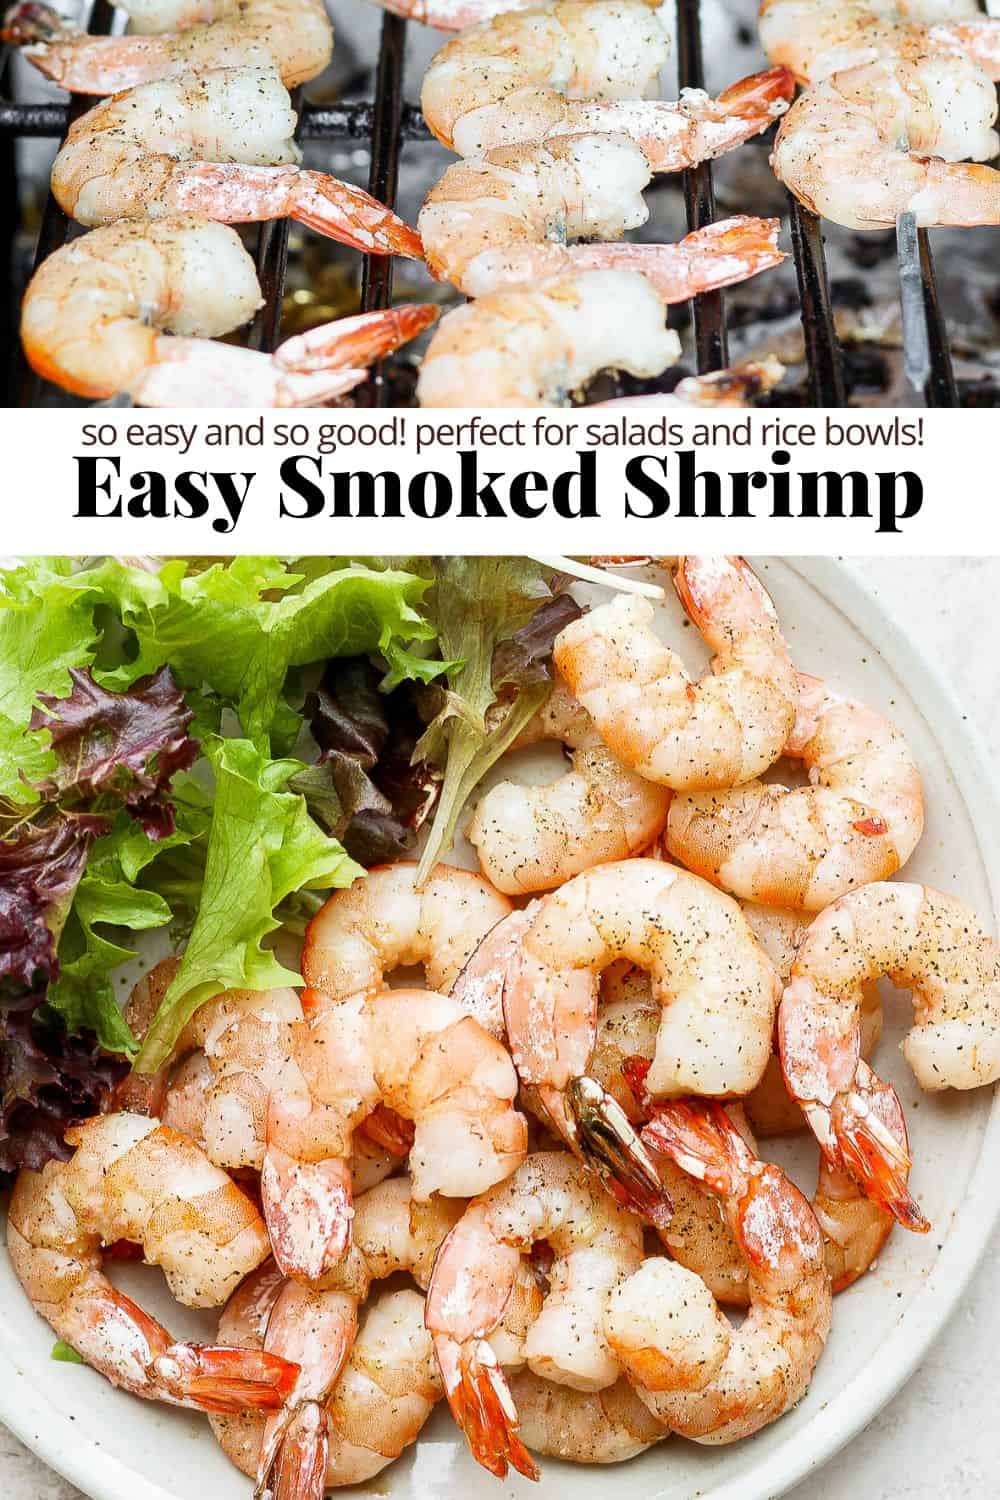 Pinterest image for smoked shrimp.